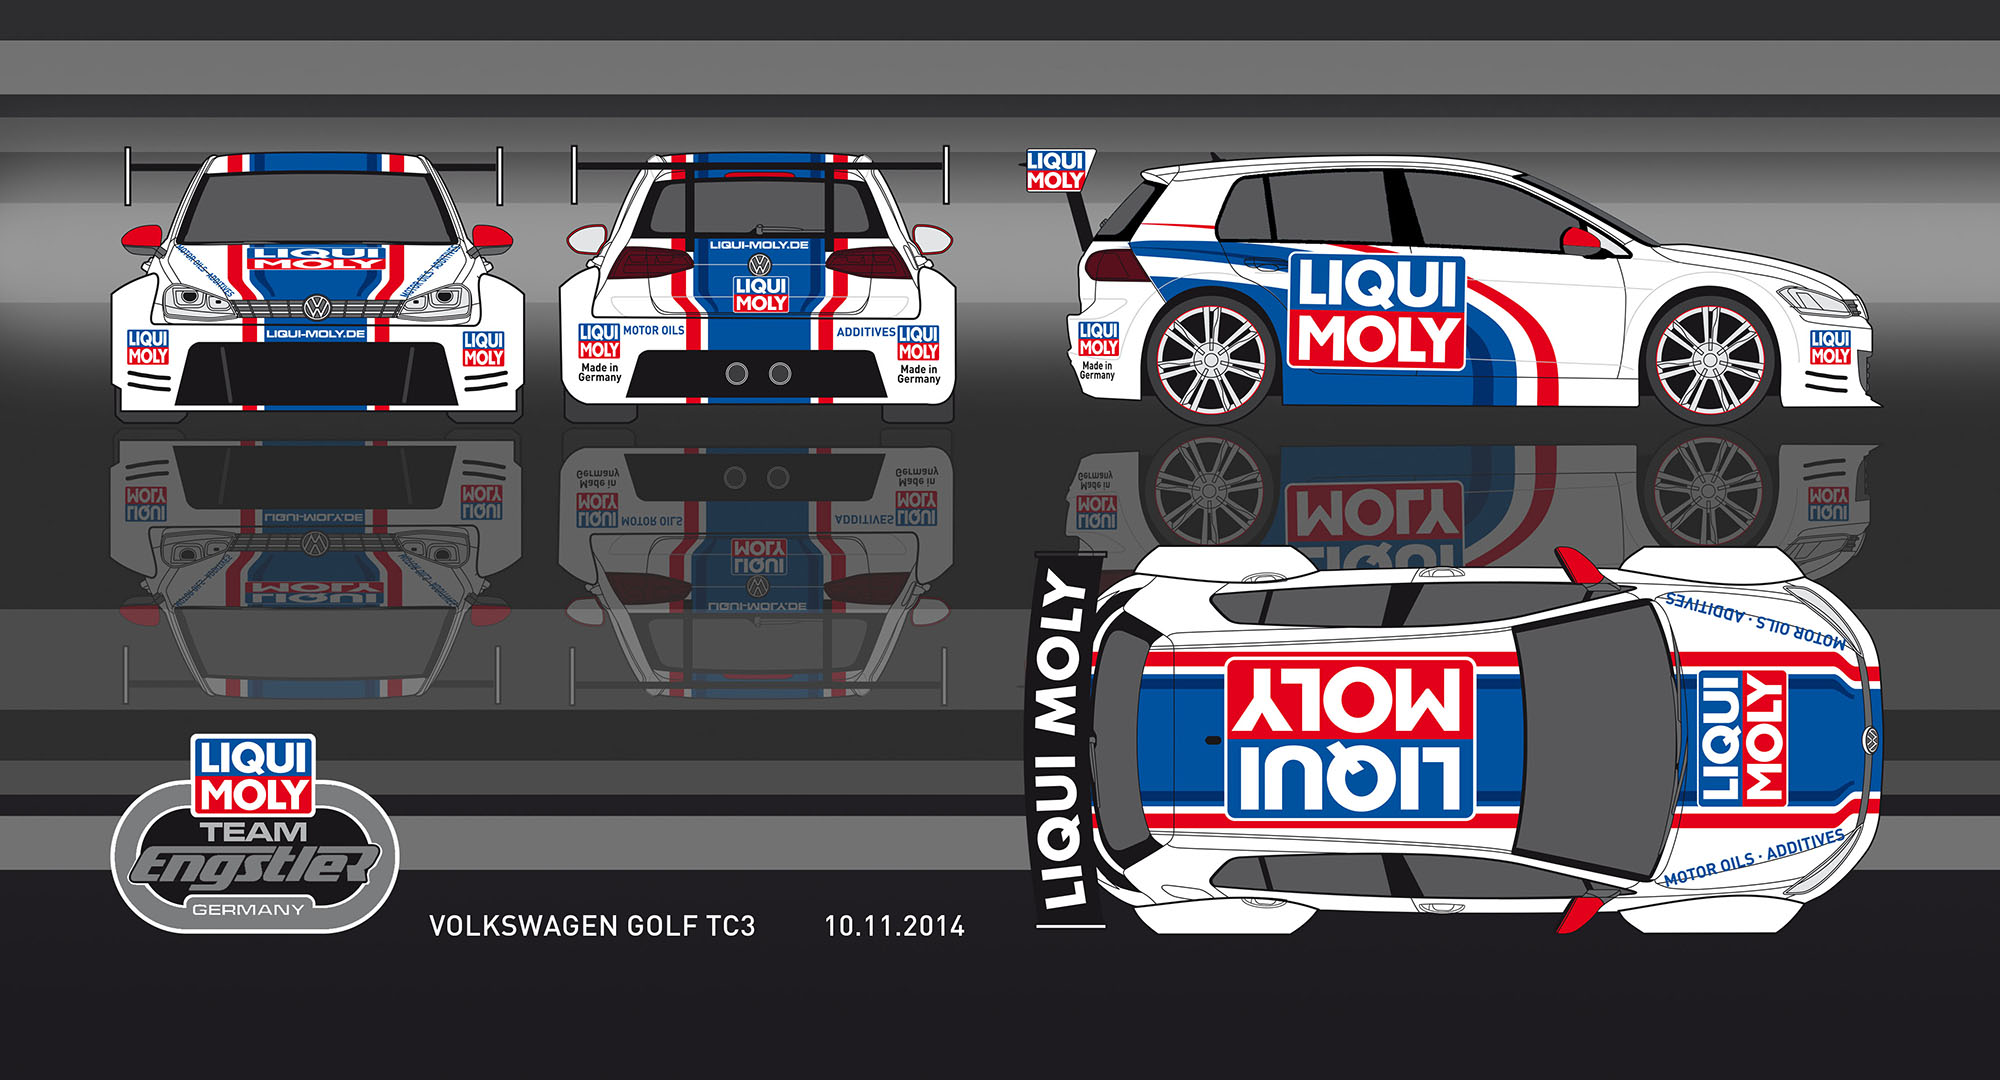 VW Golf cars for LIQUI MOLY Team Engstler